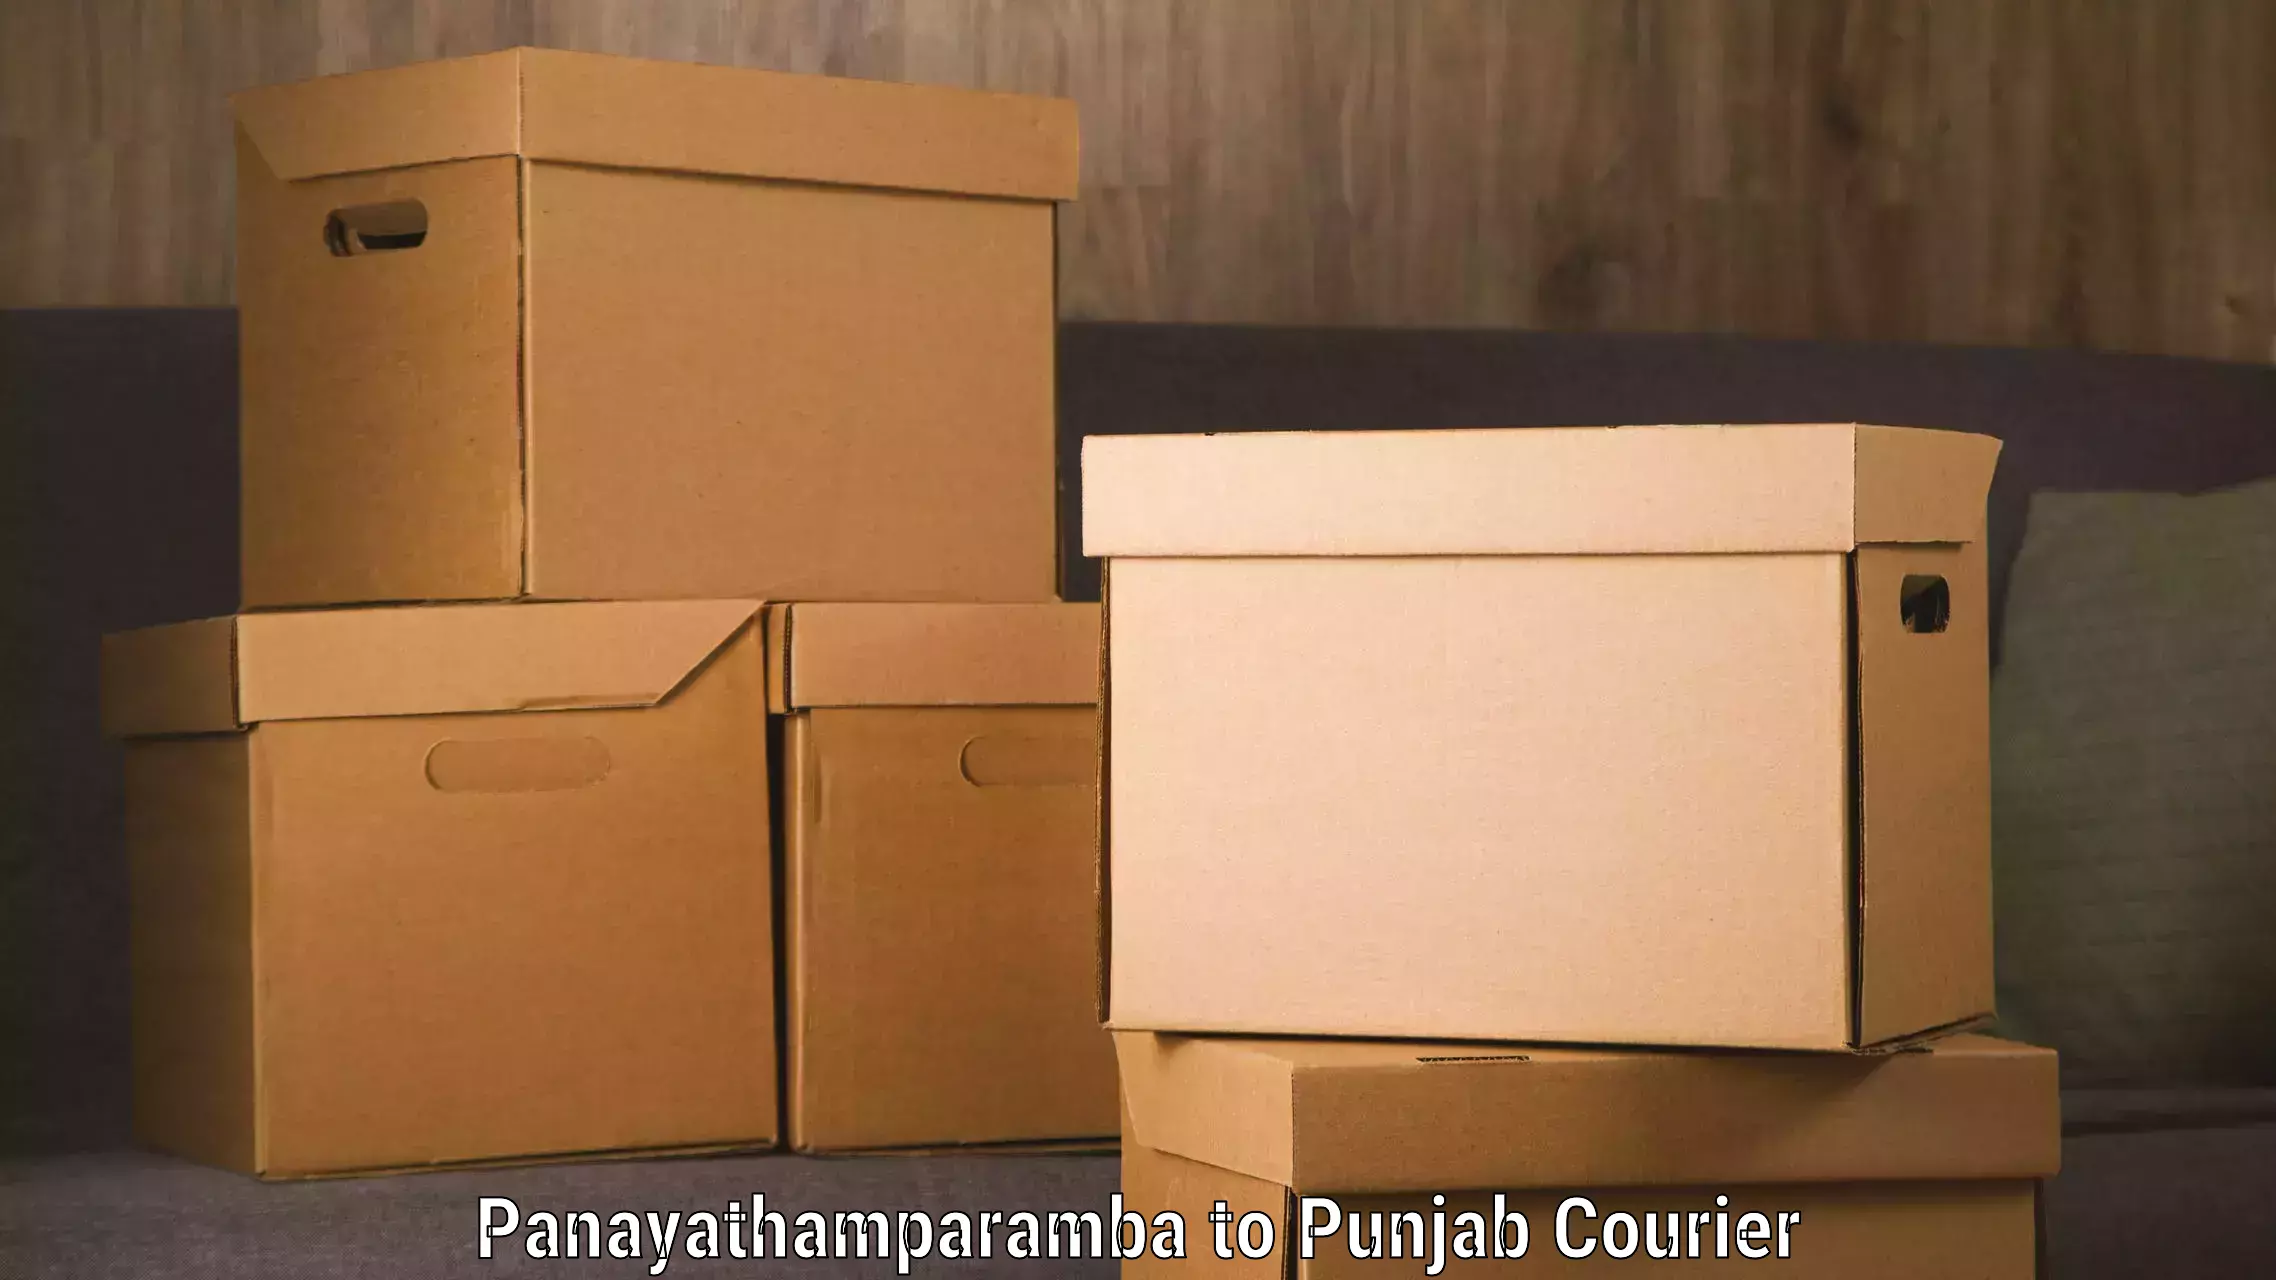 Reliable logistics providers Panayathamparamba to Mohali